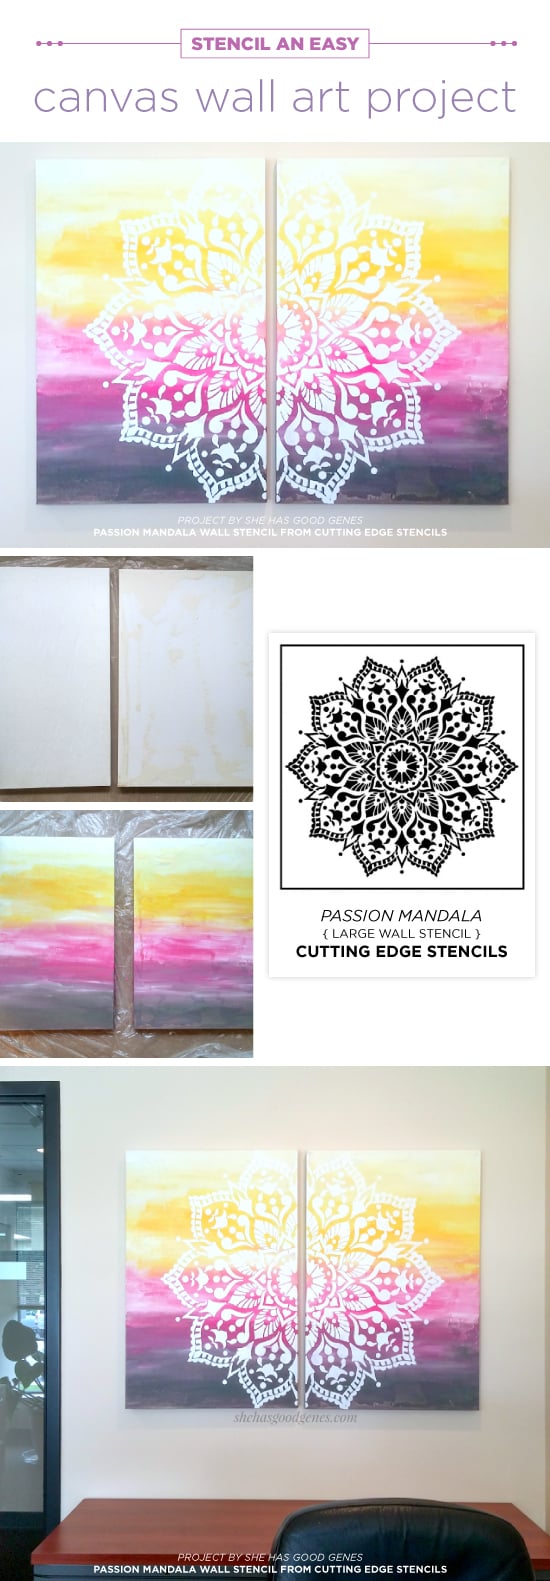 Cutting Edge Stencils shares how to stencil DIY canvas artwork using the Passion Mandala wall pattern. http://www.cuttingedgestencils.com/passion-mandala-stencil-yoga-decal-wall-stencils-mandalas.html